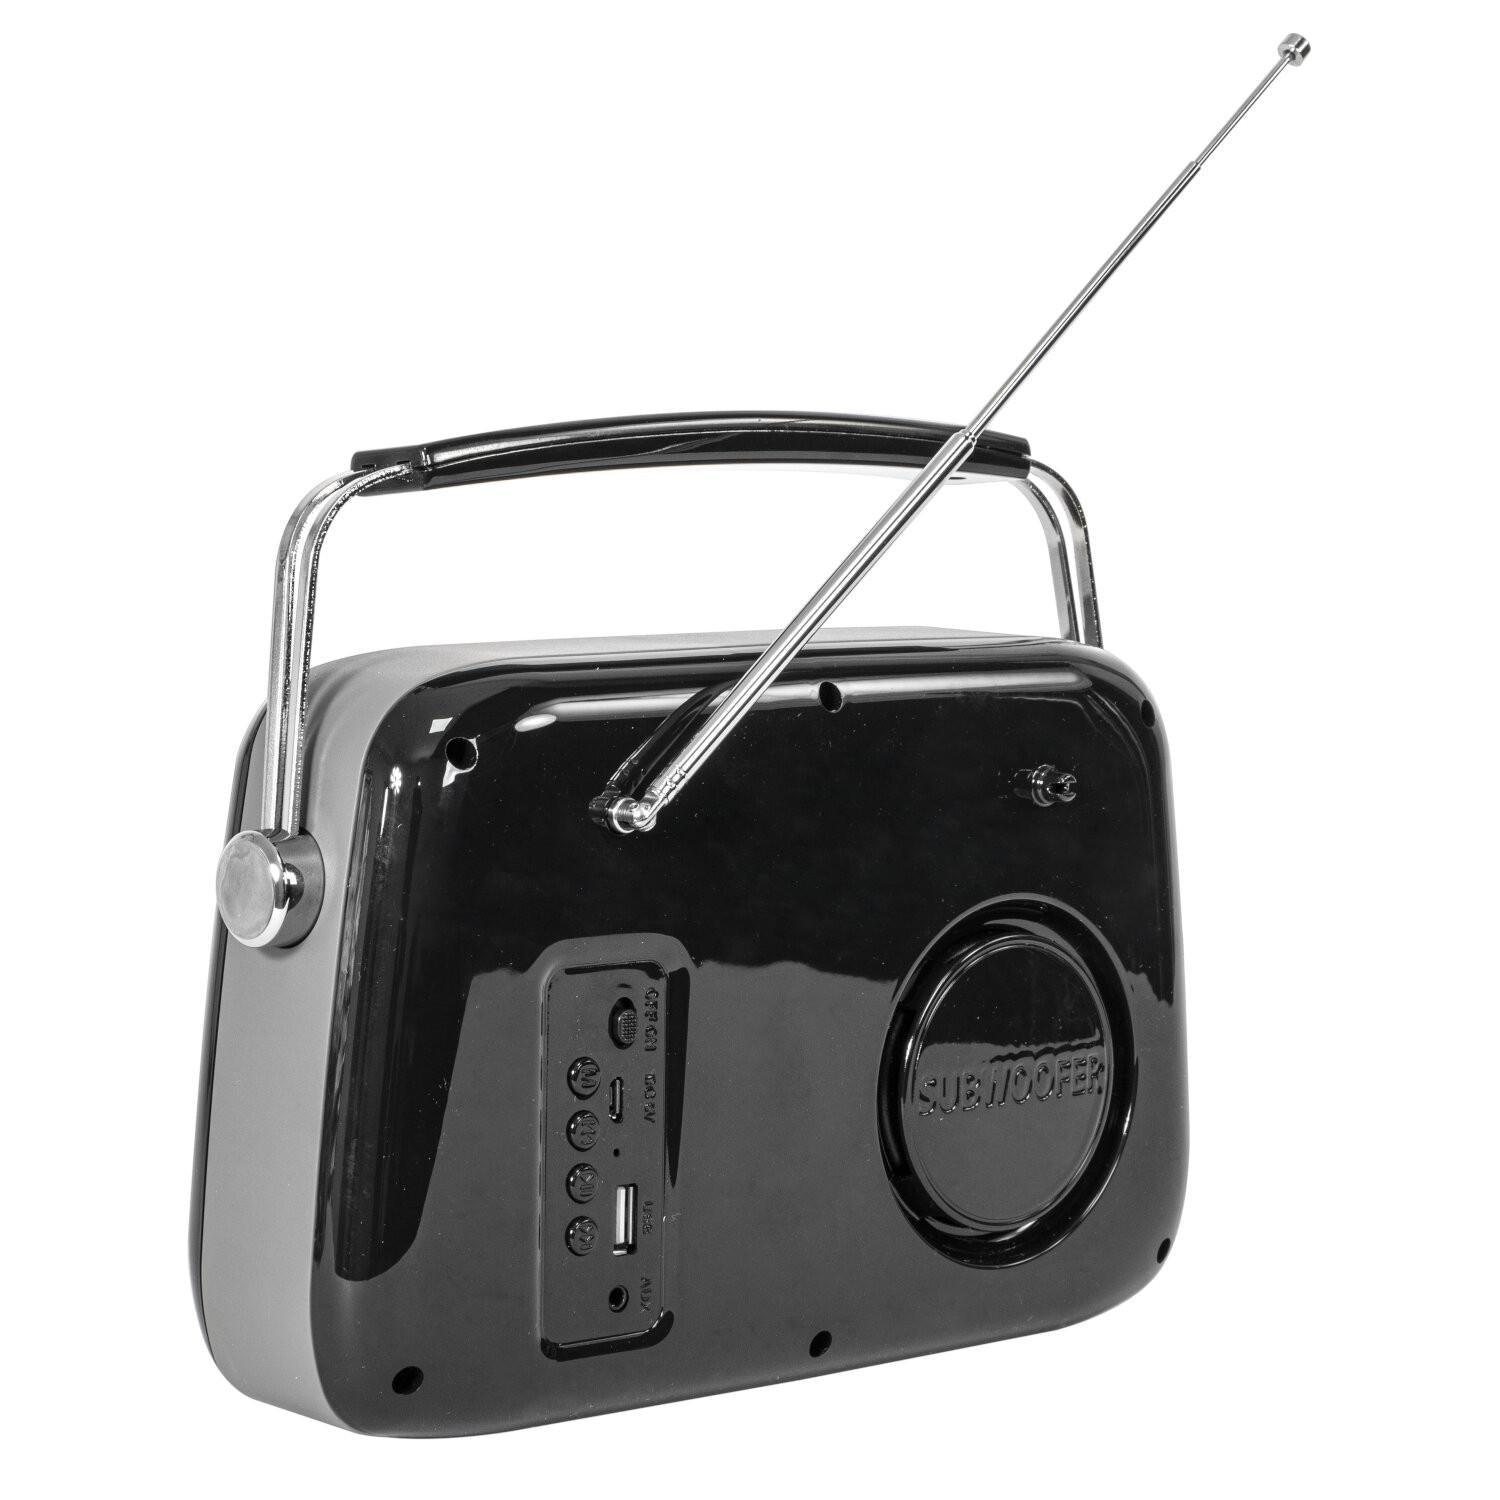 Madison FREESOUND-VR40B Black Portable Vintage Radio with Bluetooth, USB, FM - DY Pro Audio